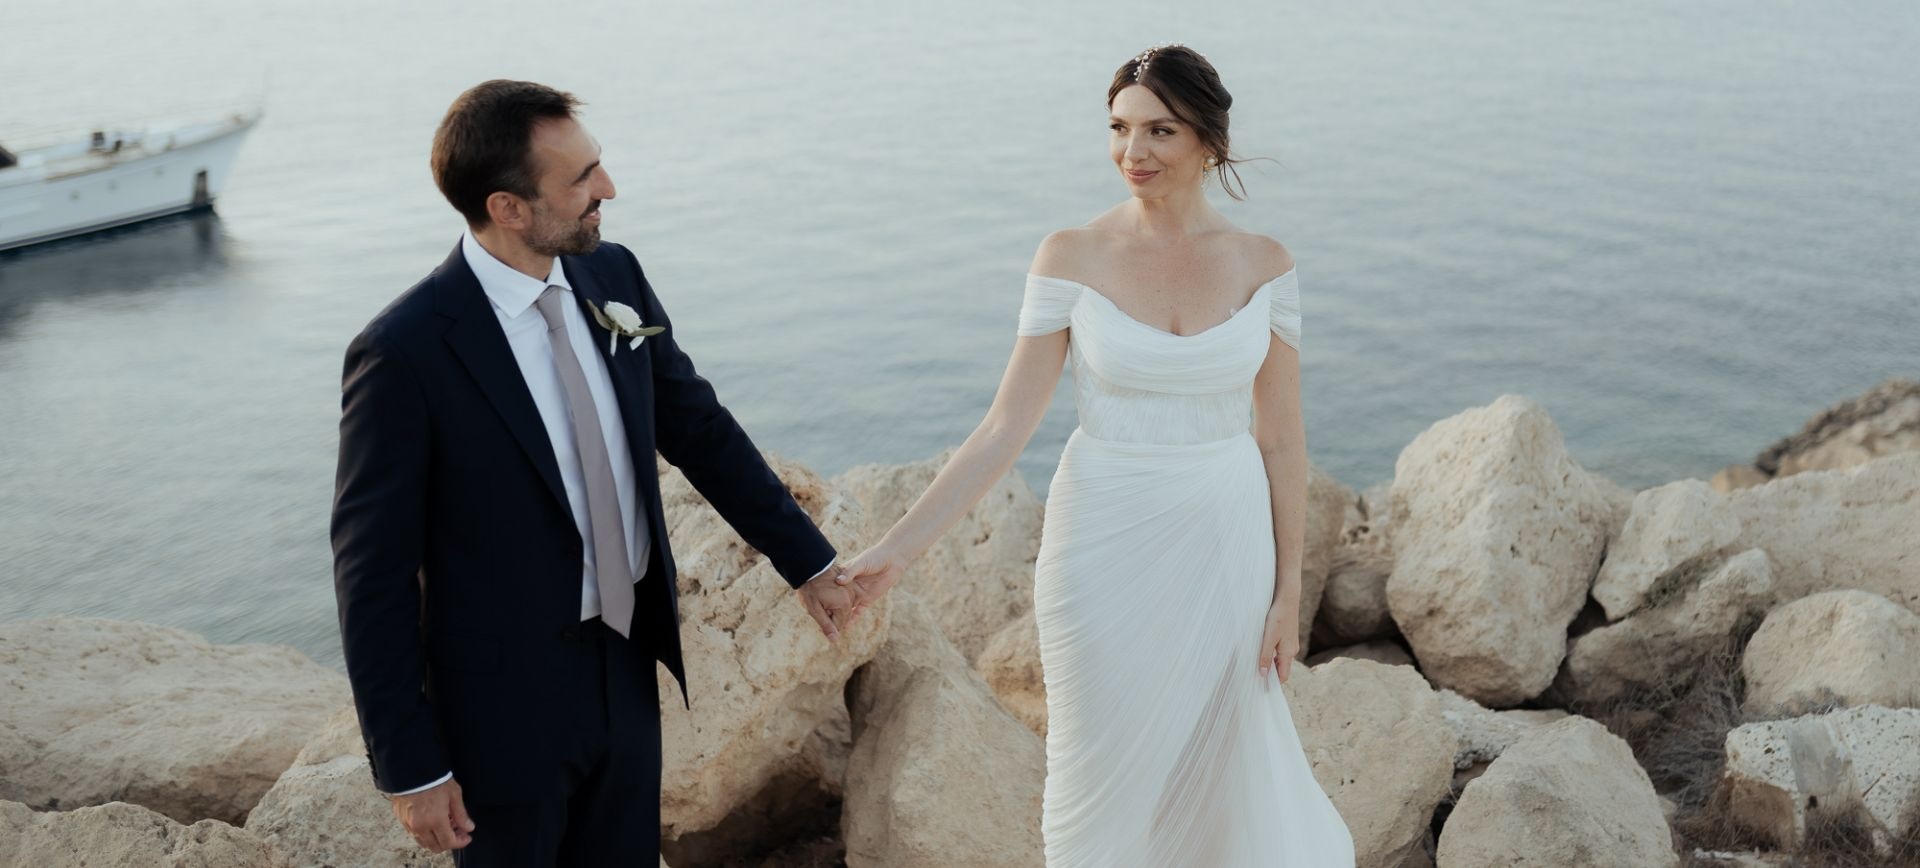 Elope in Cyprus Wedding Elopement by the Mediterranean Sea